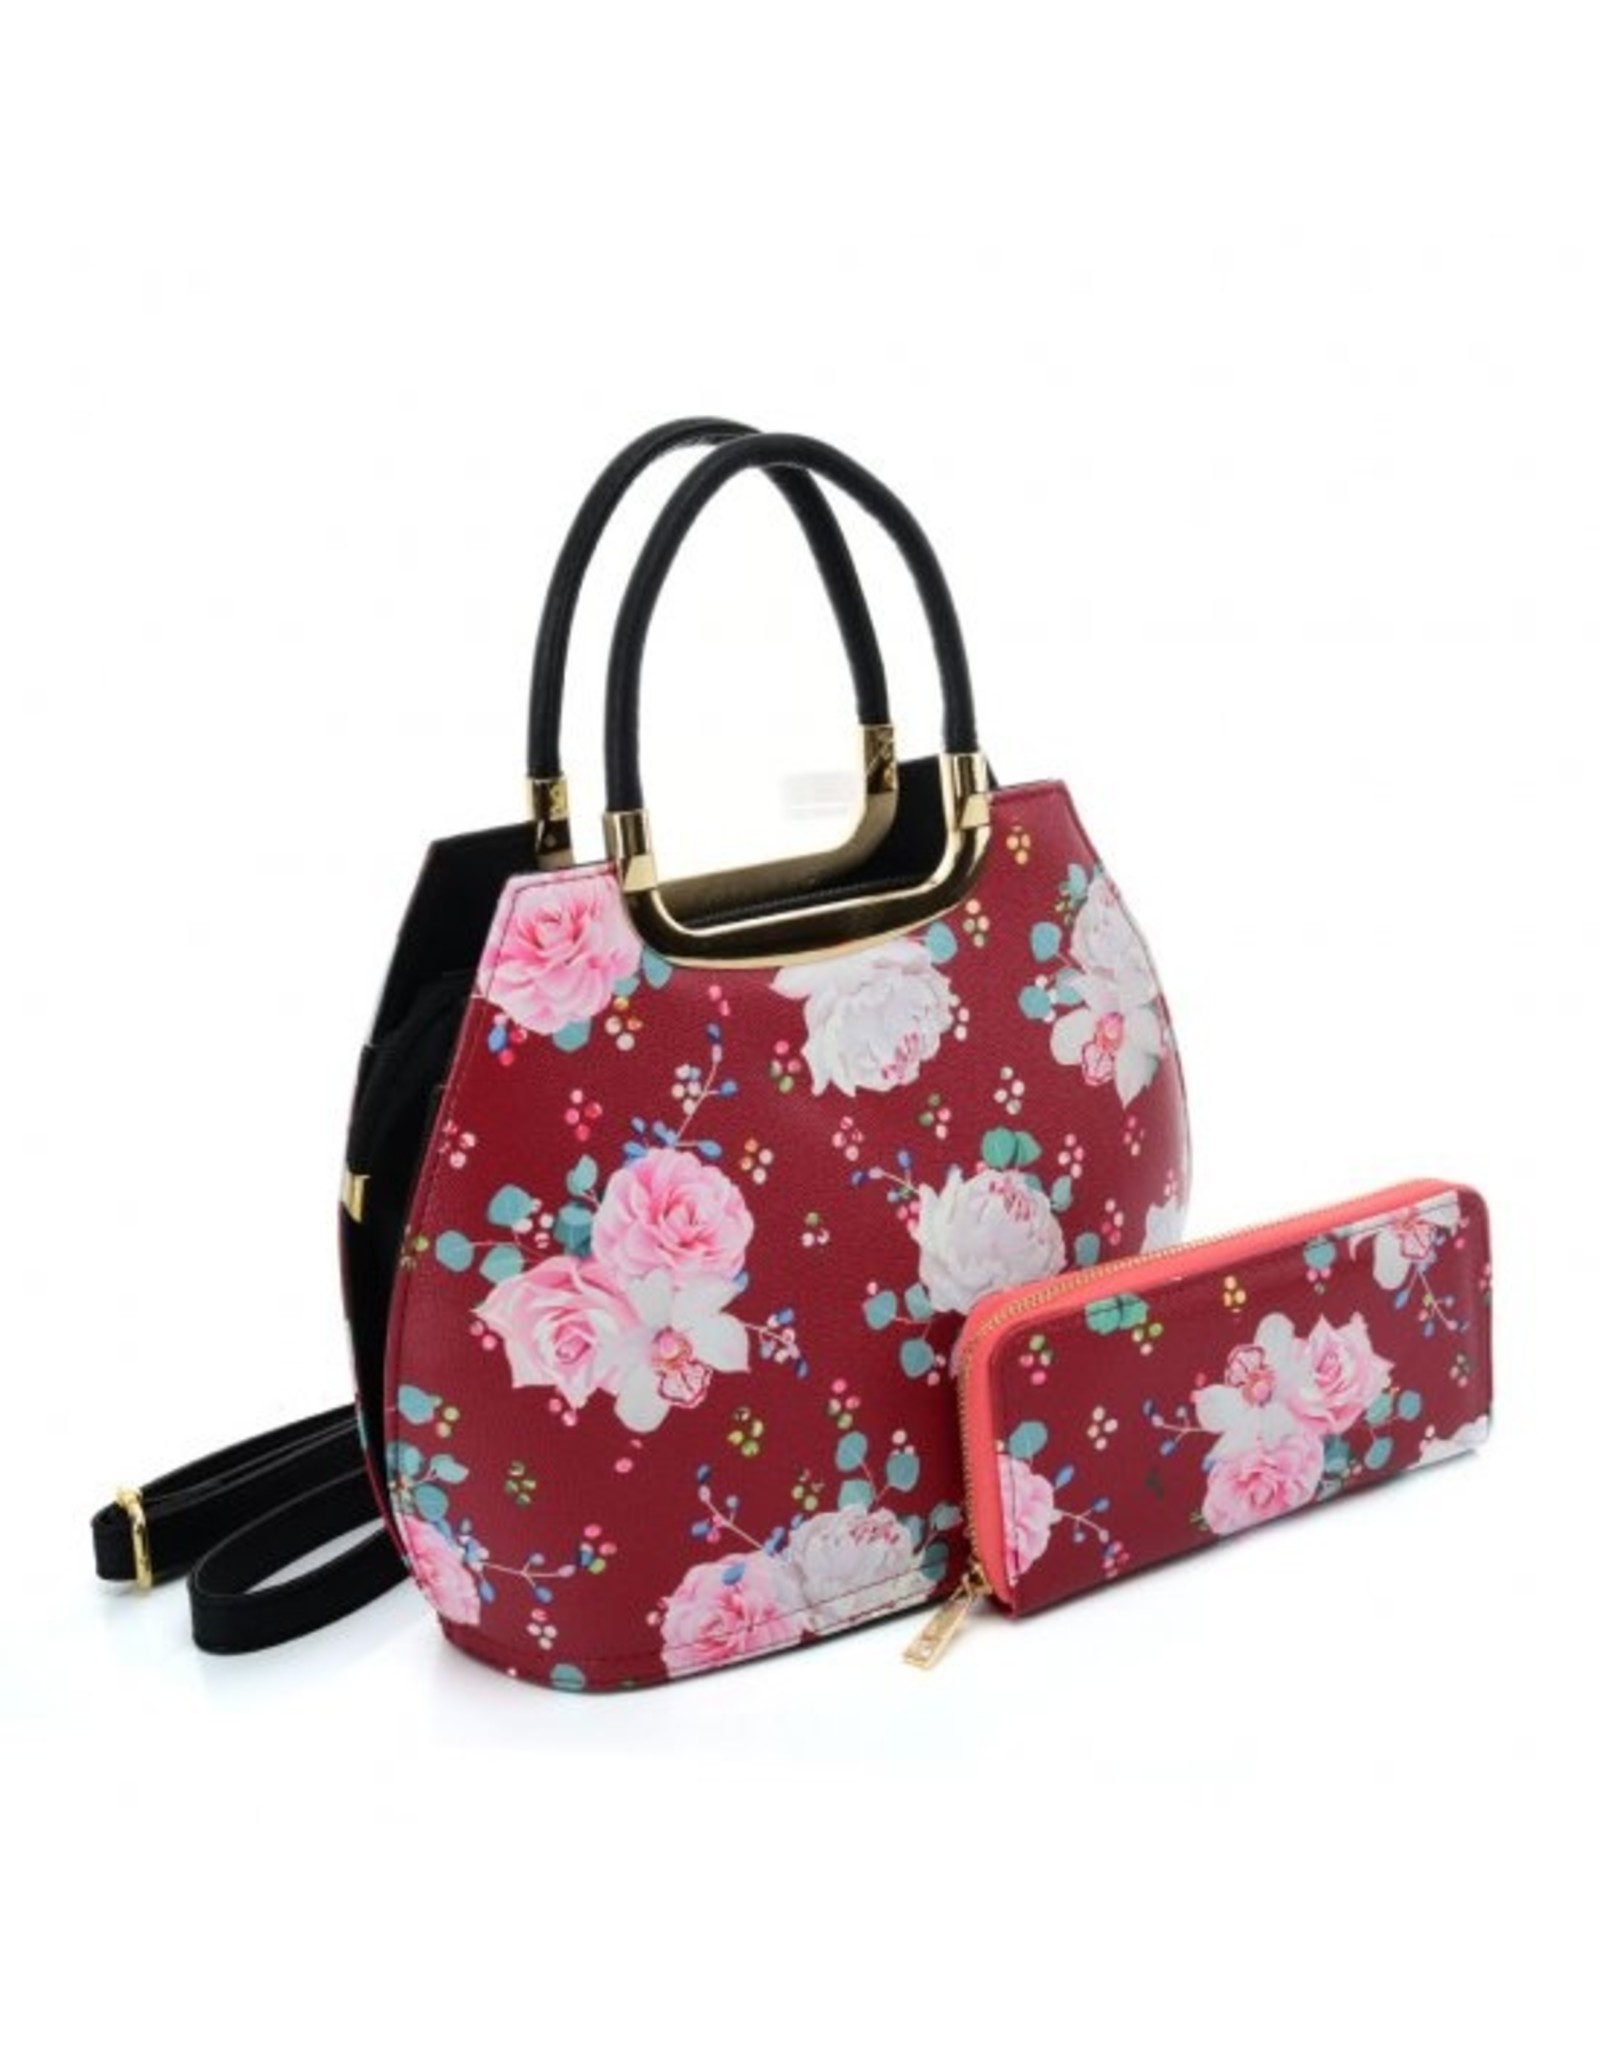 Trukado Fashion bags - Handbag with flowers Vintage Roses red